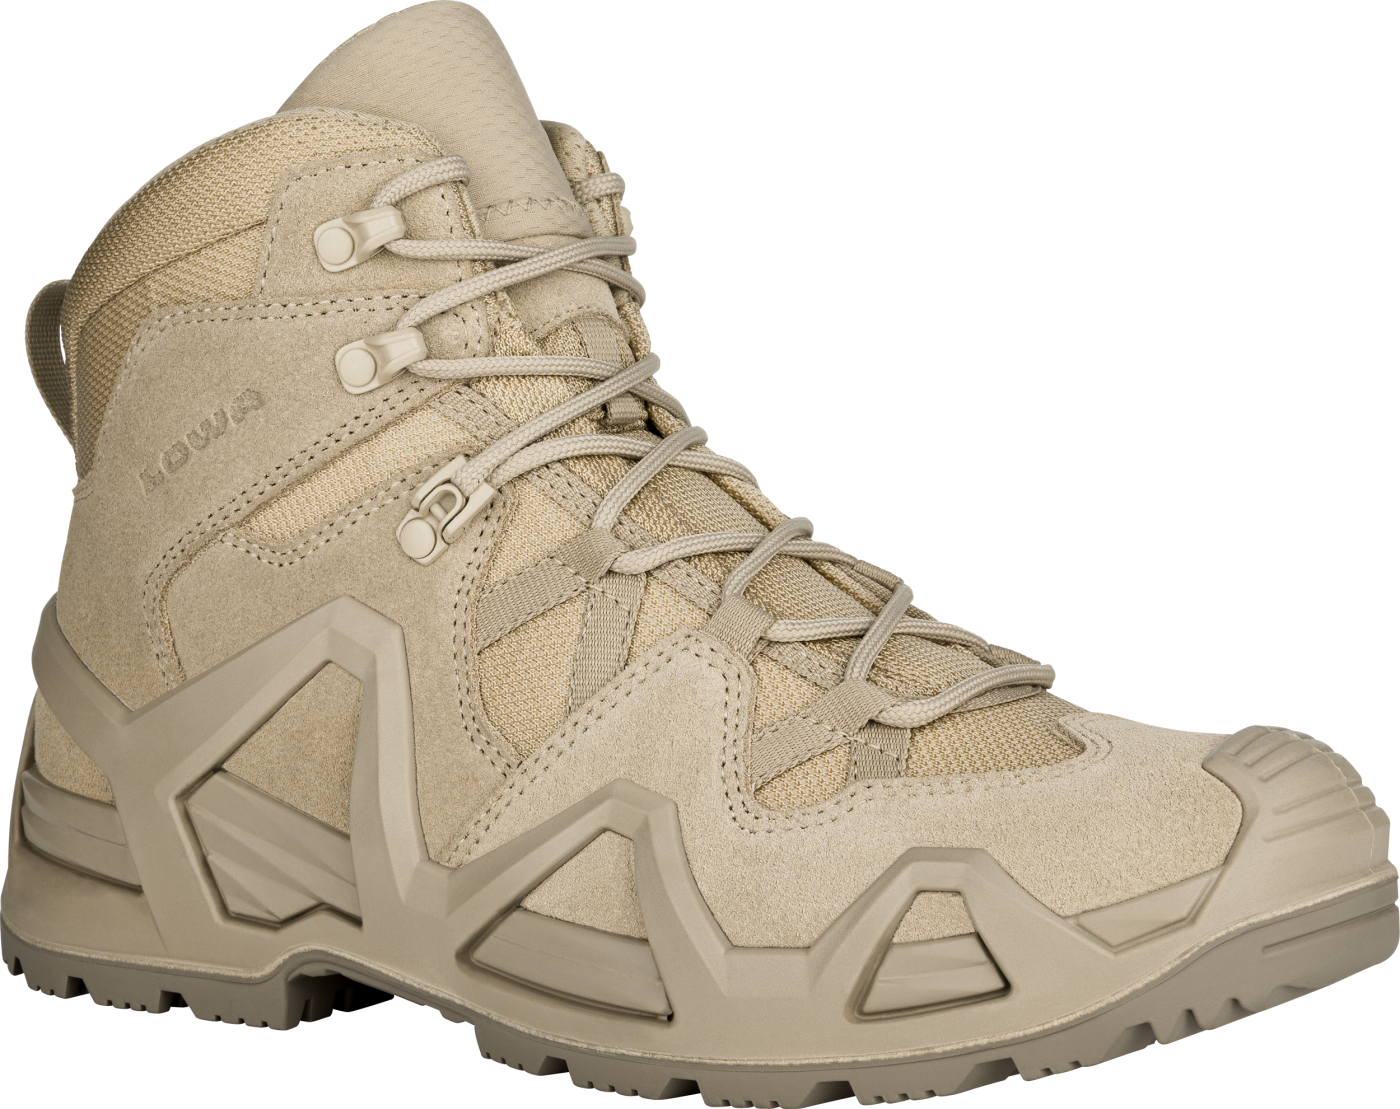 ZEPHYR MK2 MID: TASK FORCE: CLOSE-QUARTERS COMBAT Shoes for Men | LOWA NL